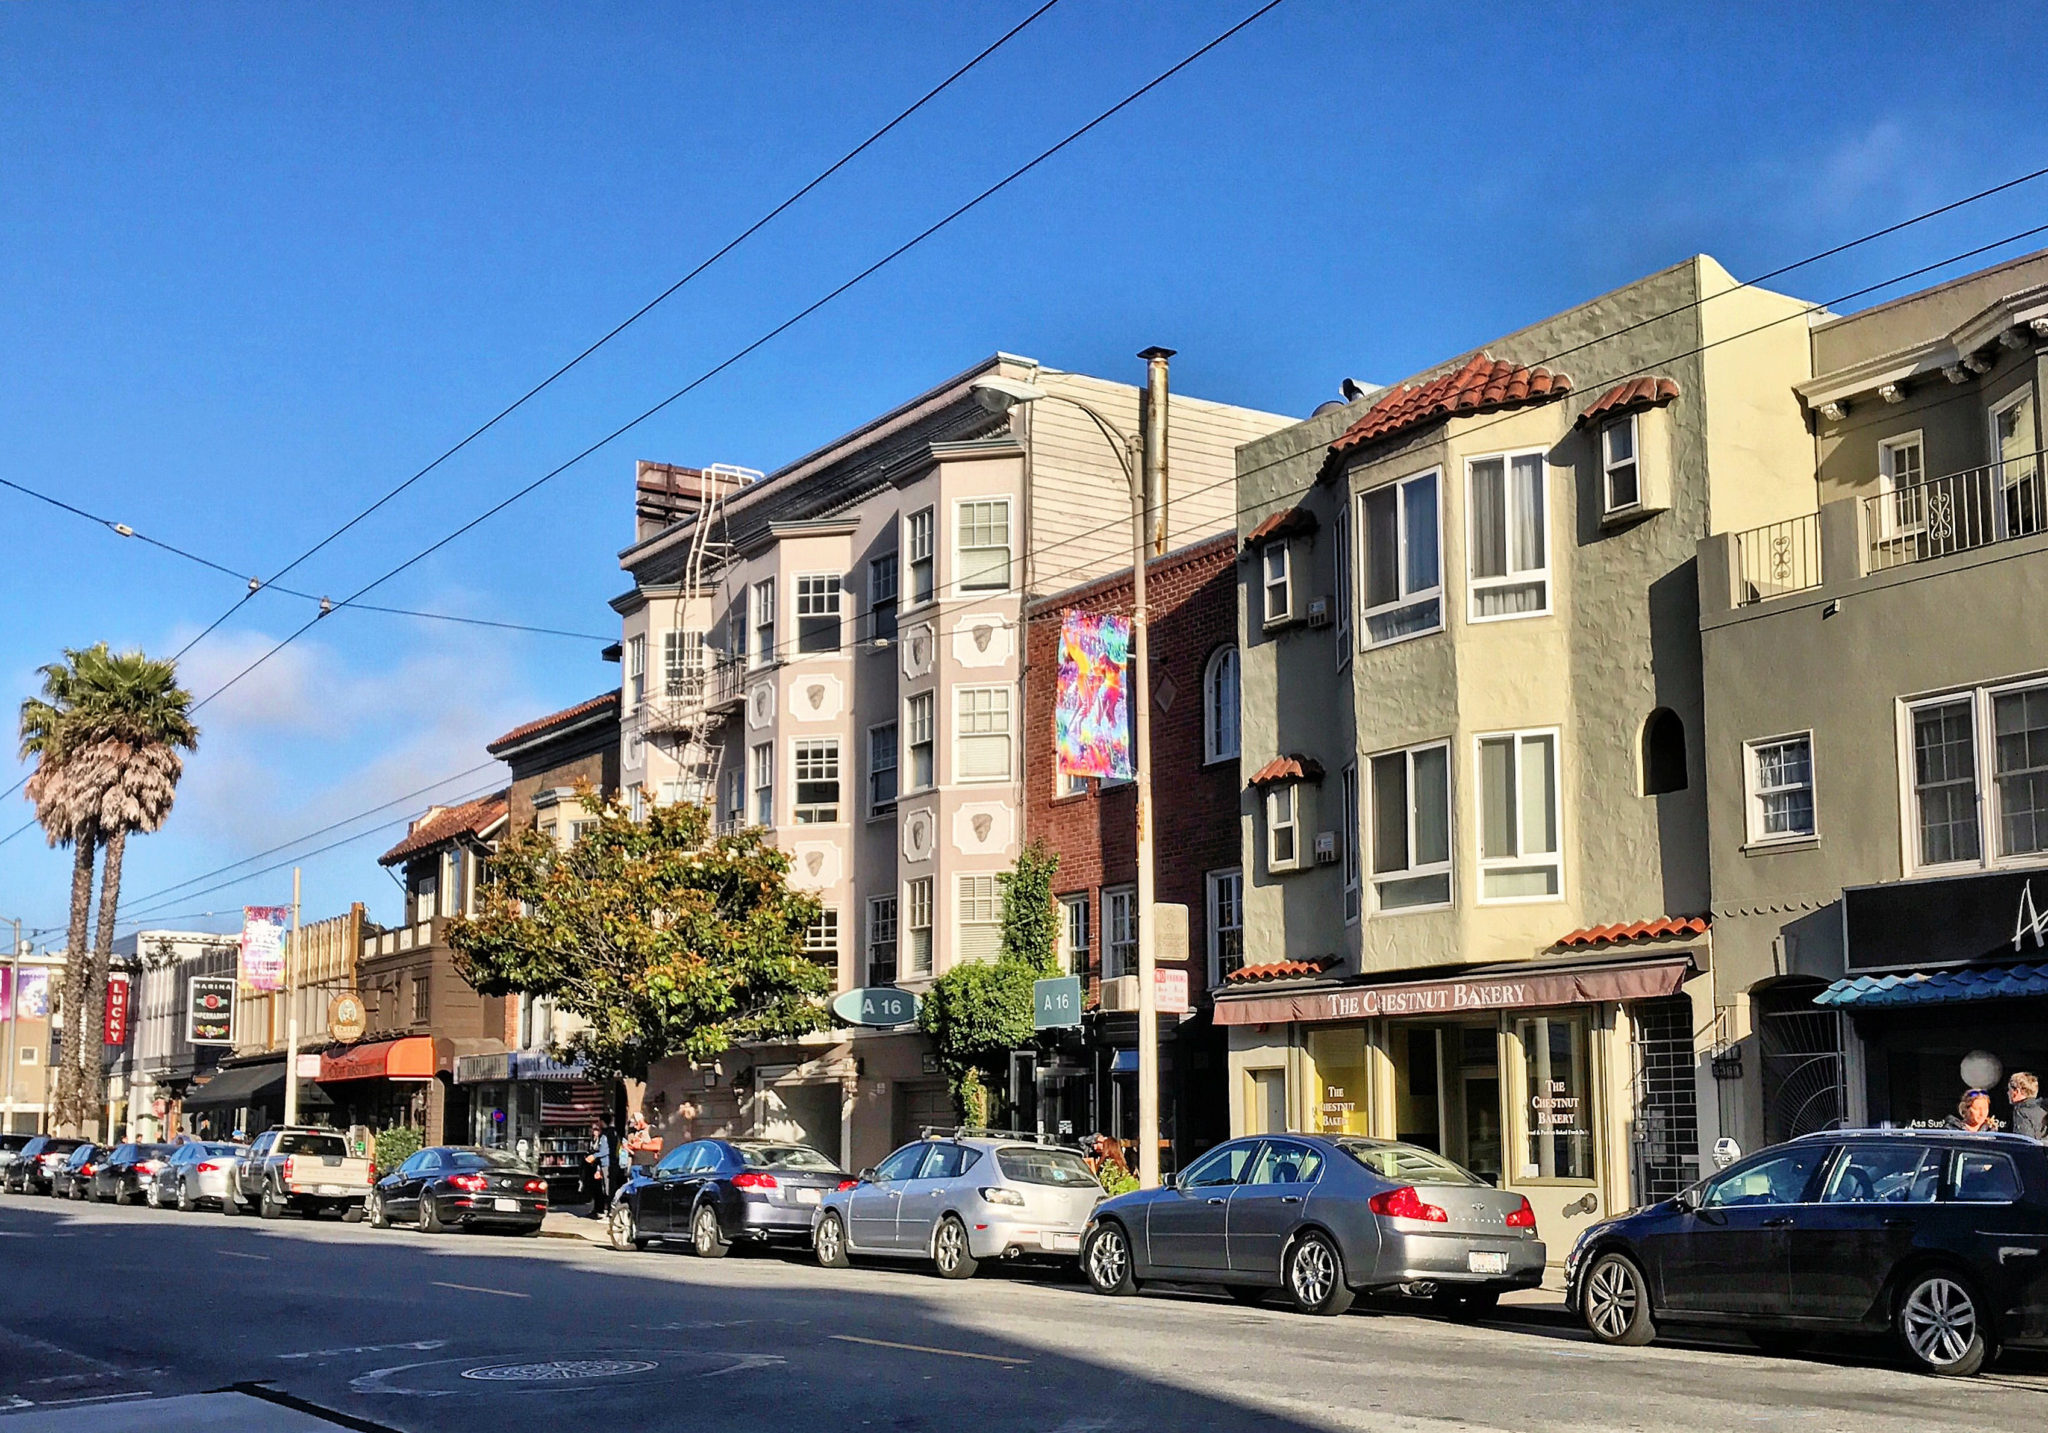 The Marina District of San Francisco